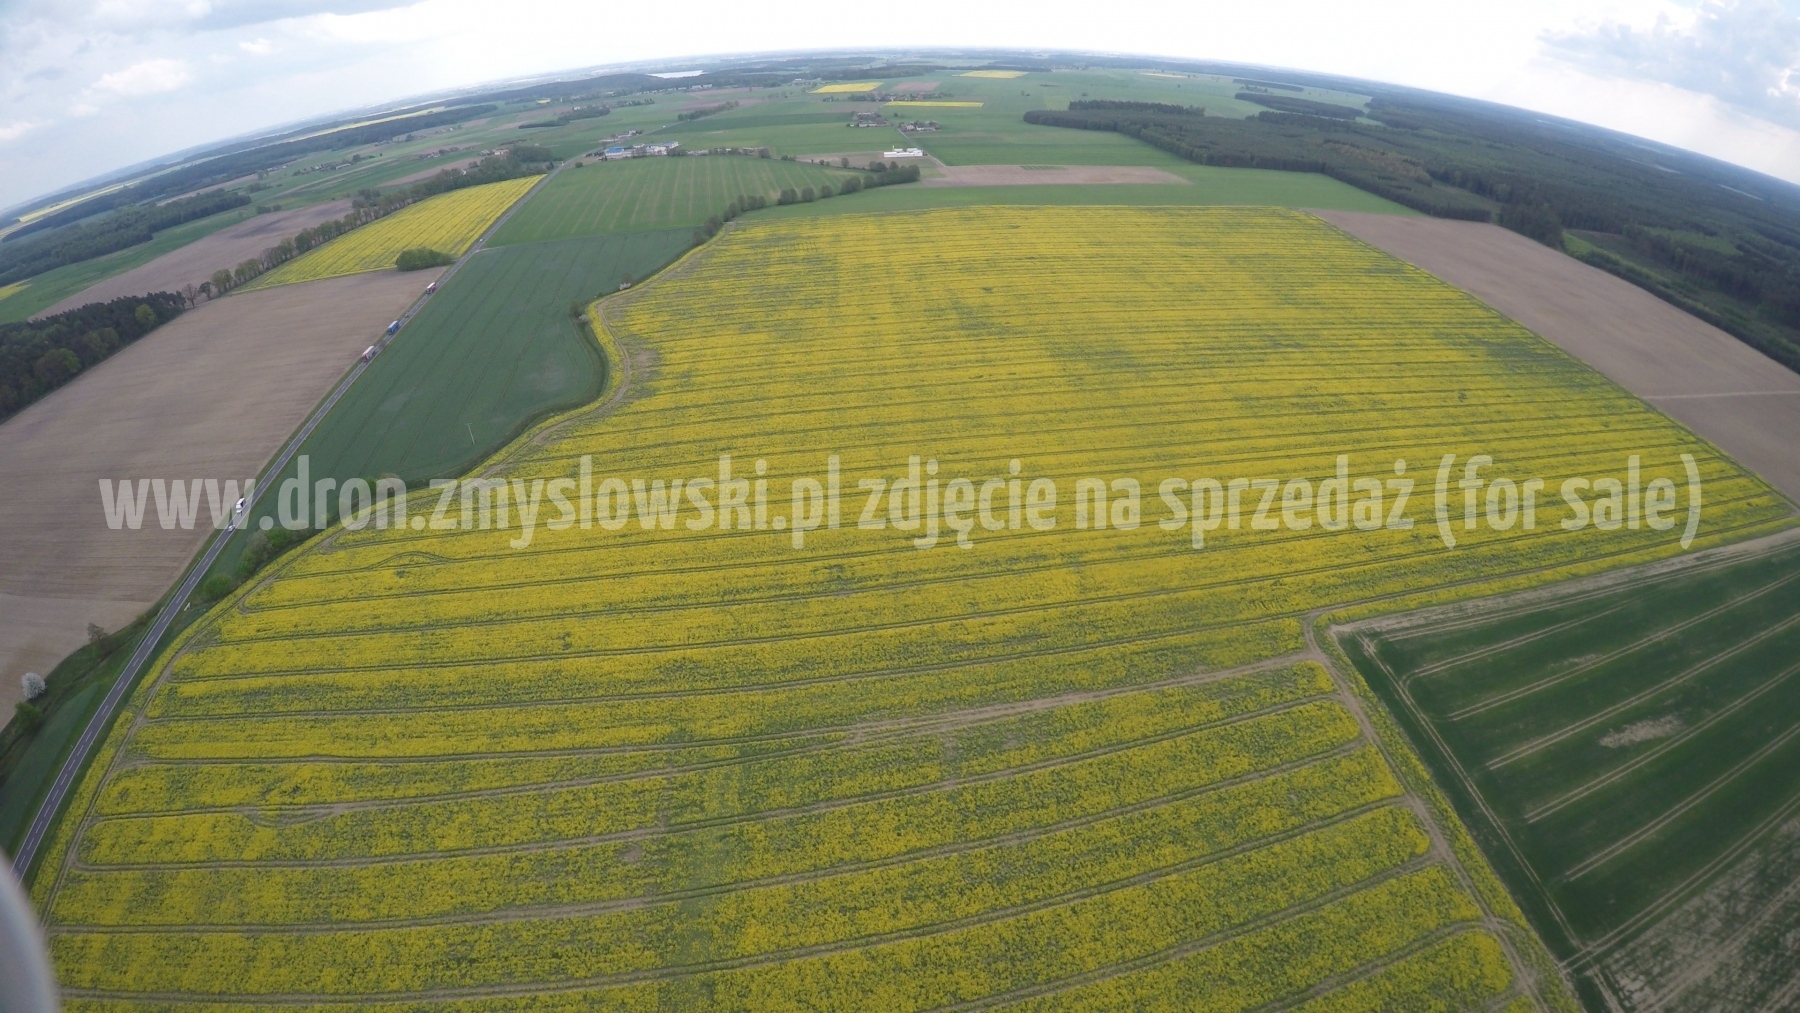 2016-05-12-lot-dronem-nad-rzepakiem-w-miejscowosci-Zamarte-001_034